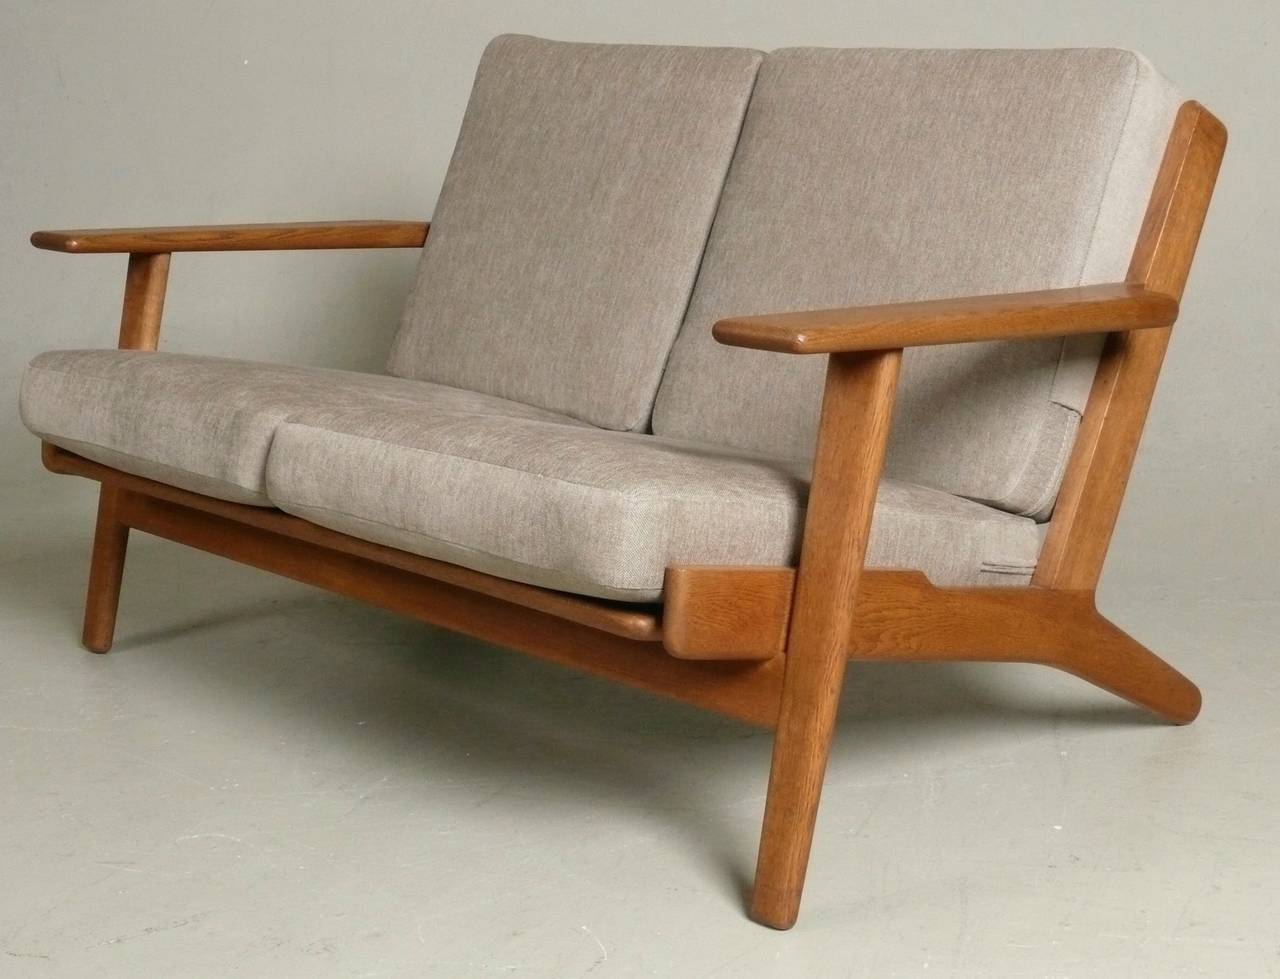 Late 1950s, solid oak frame settee designed by Hans Wegner for Getama, Denmark. New Knoll upholstery over original spring cushions.